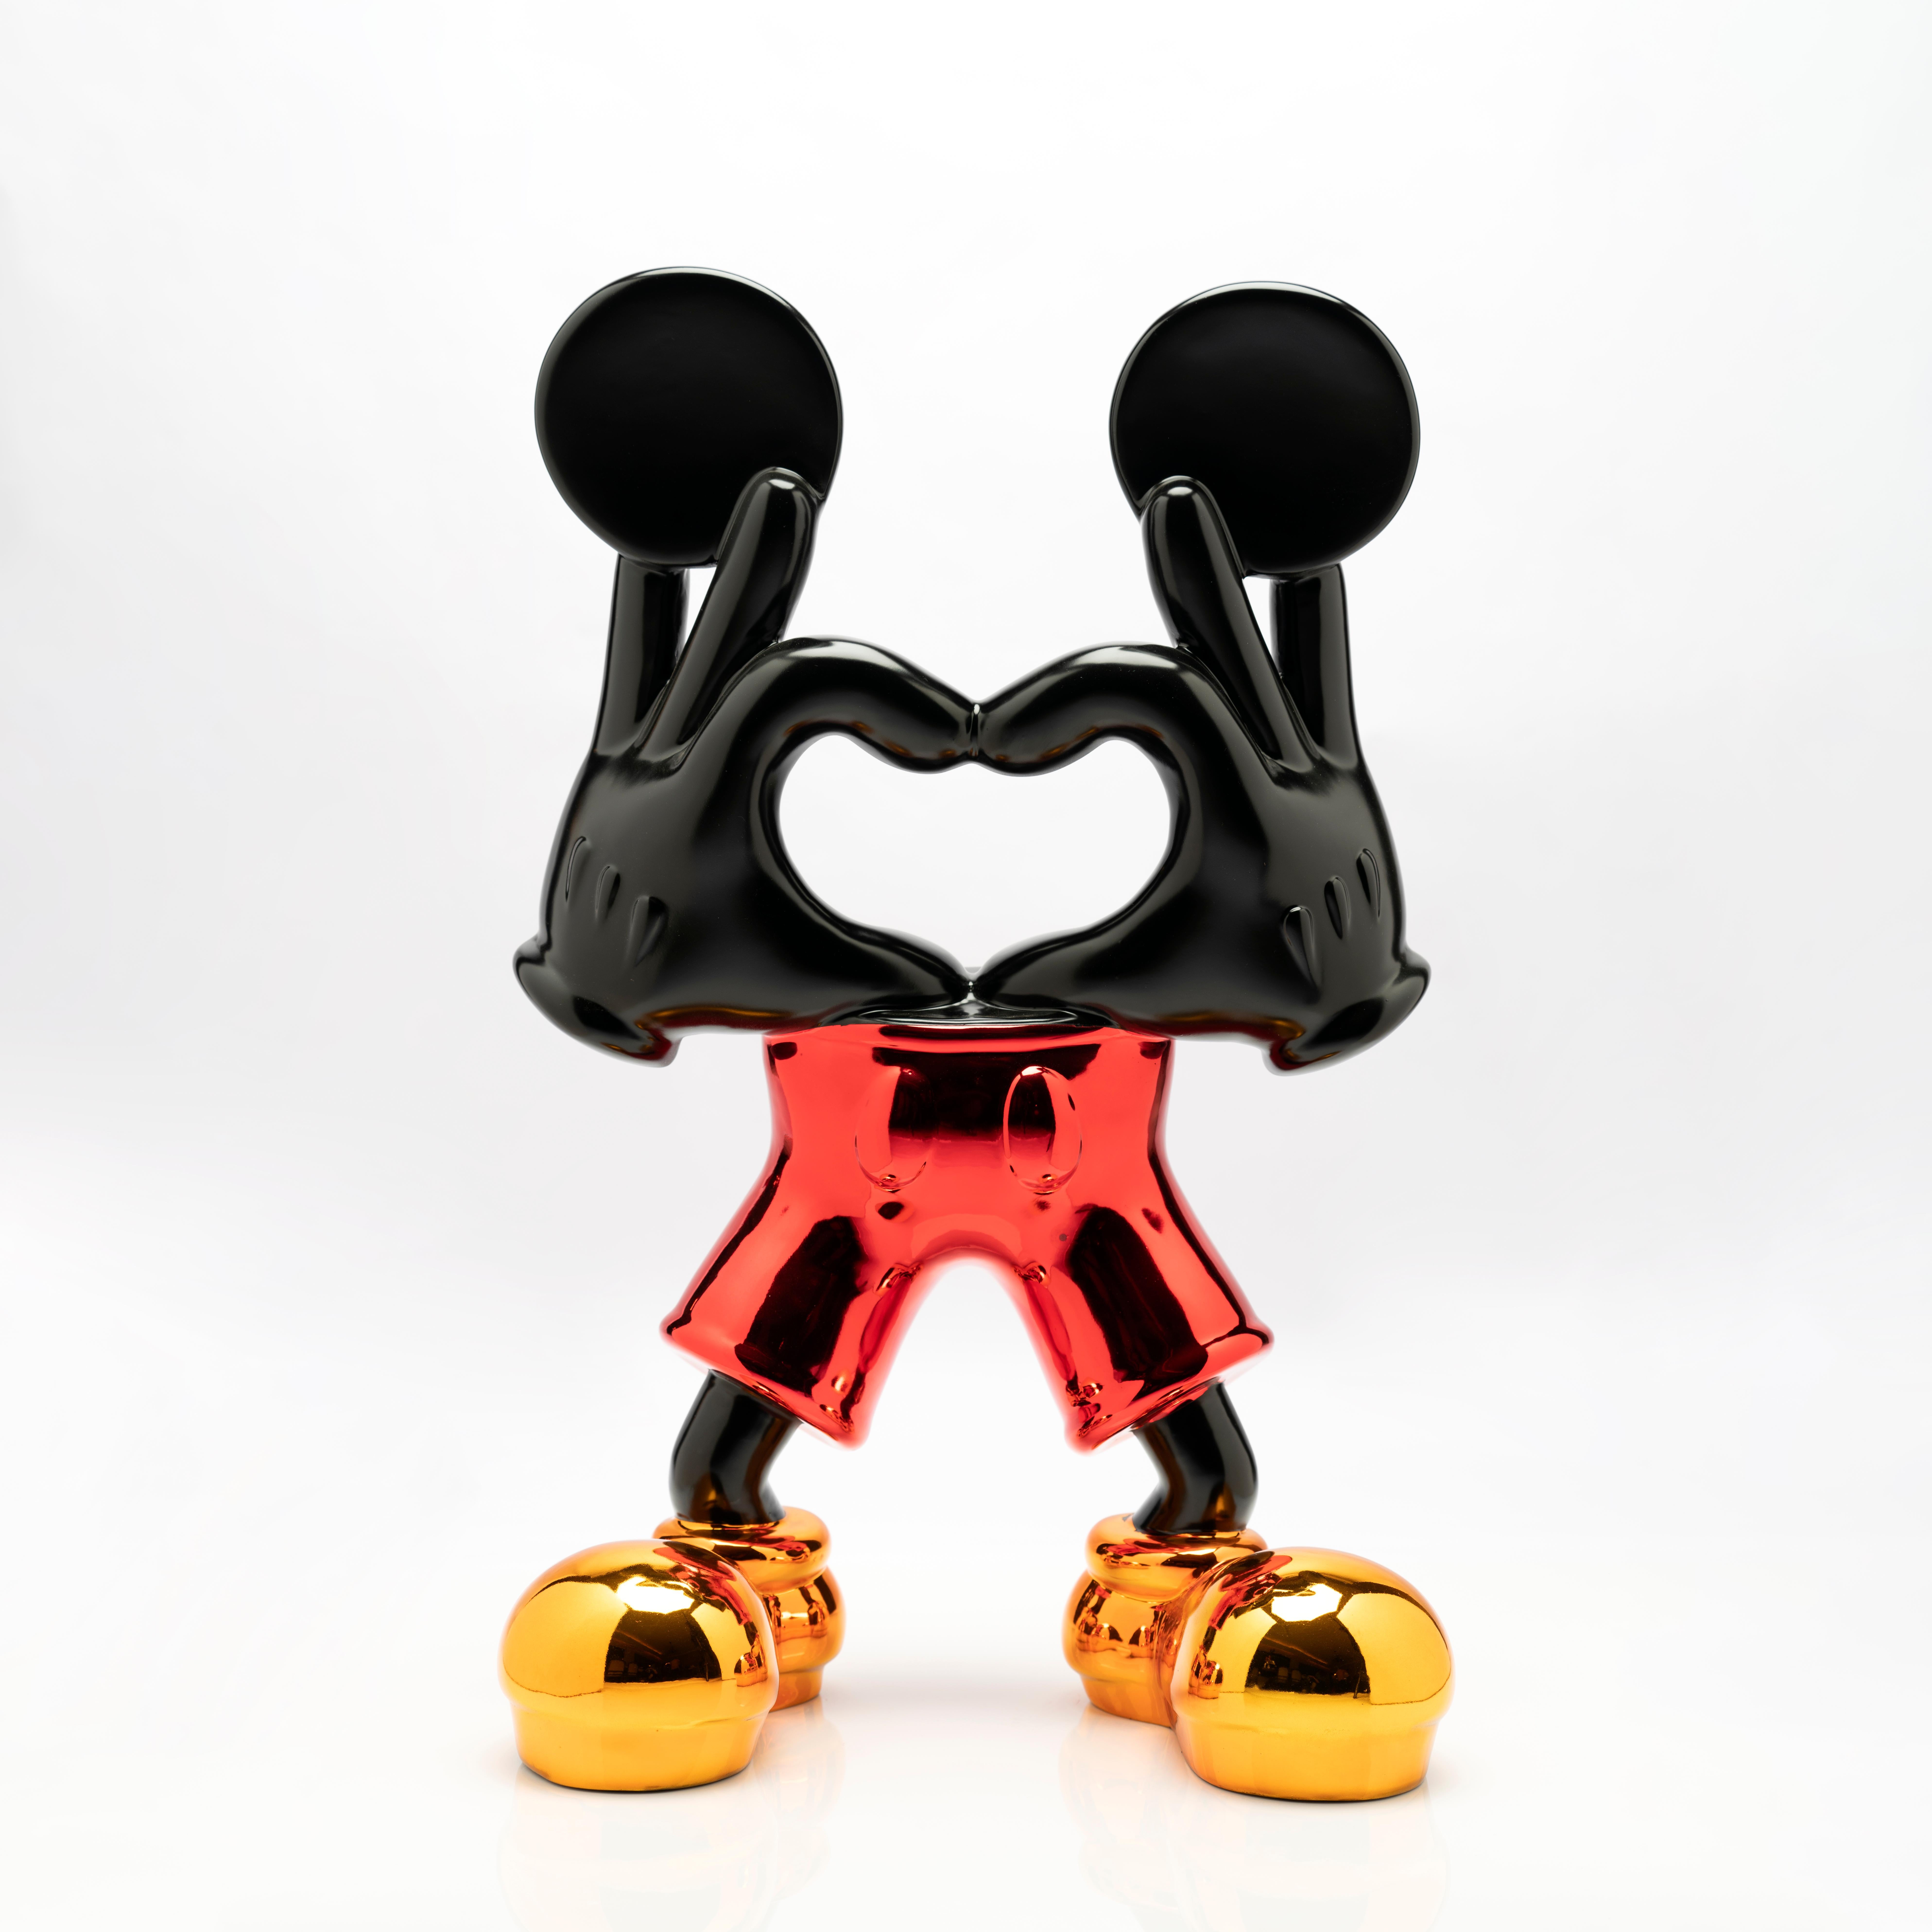 Sanuj Birla Figurative Sculpture - Love Mickey limited edition Resin and Fibreglass Sculpture art Modern 